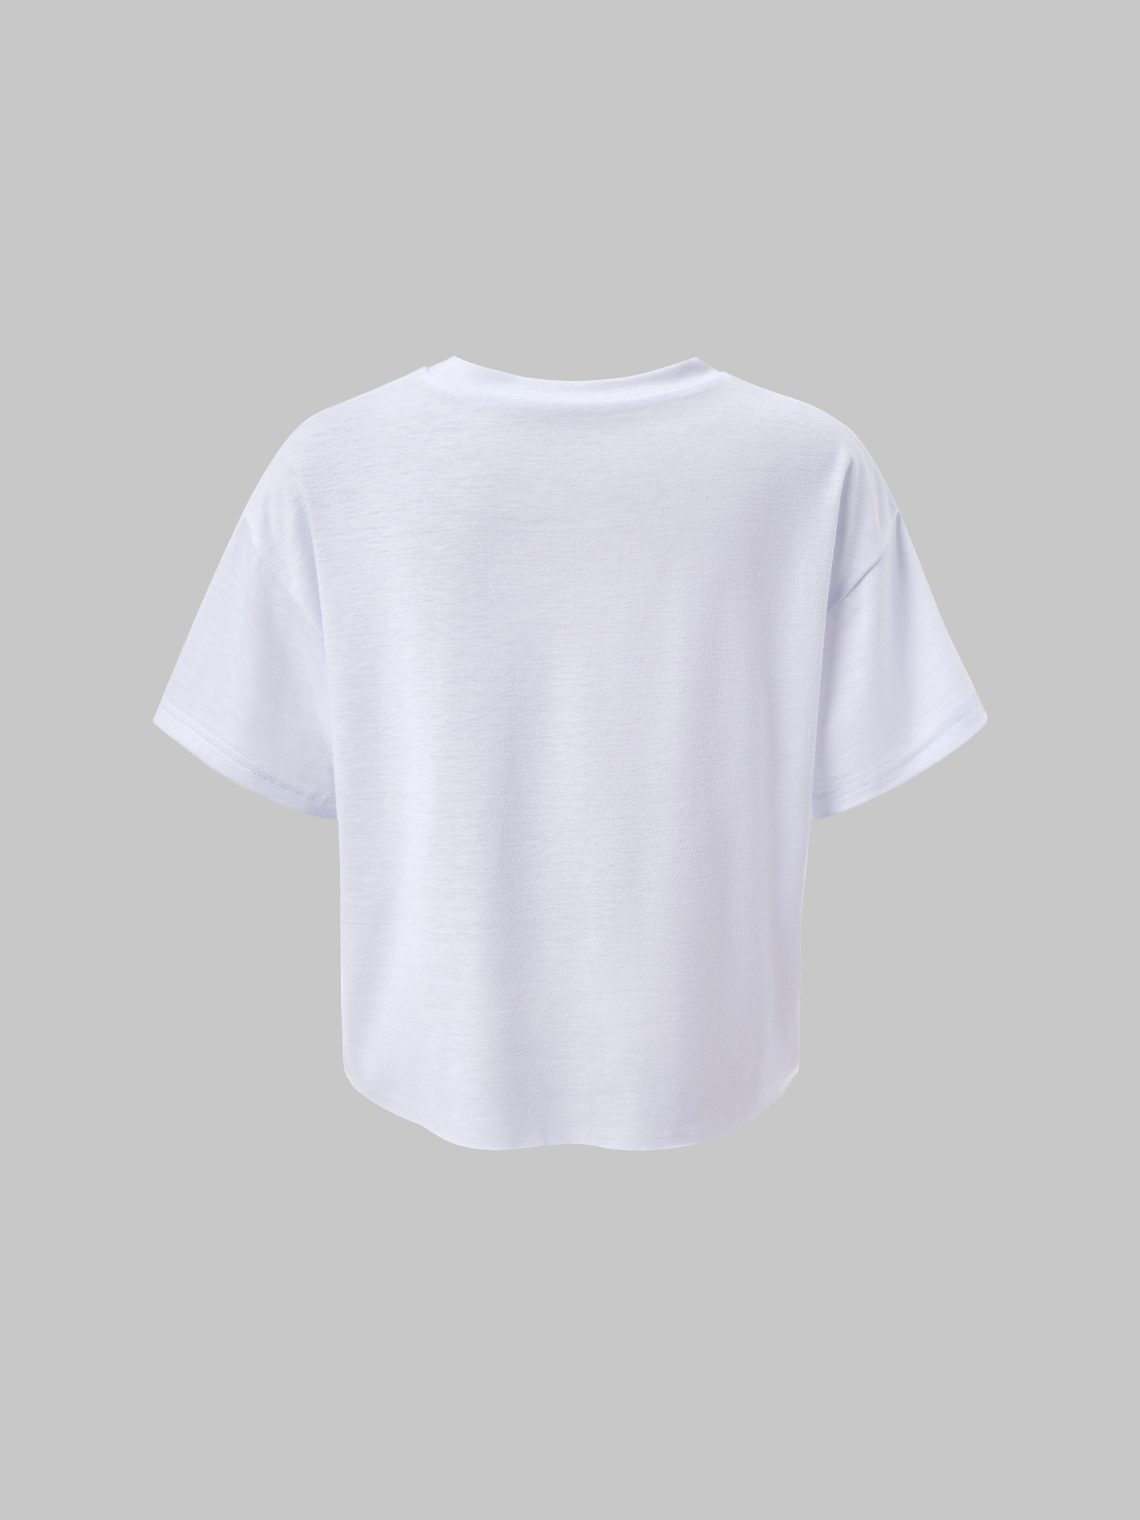 Street White Body Print Top T-Shirt